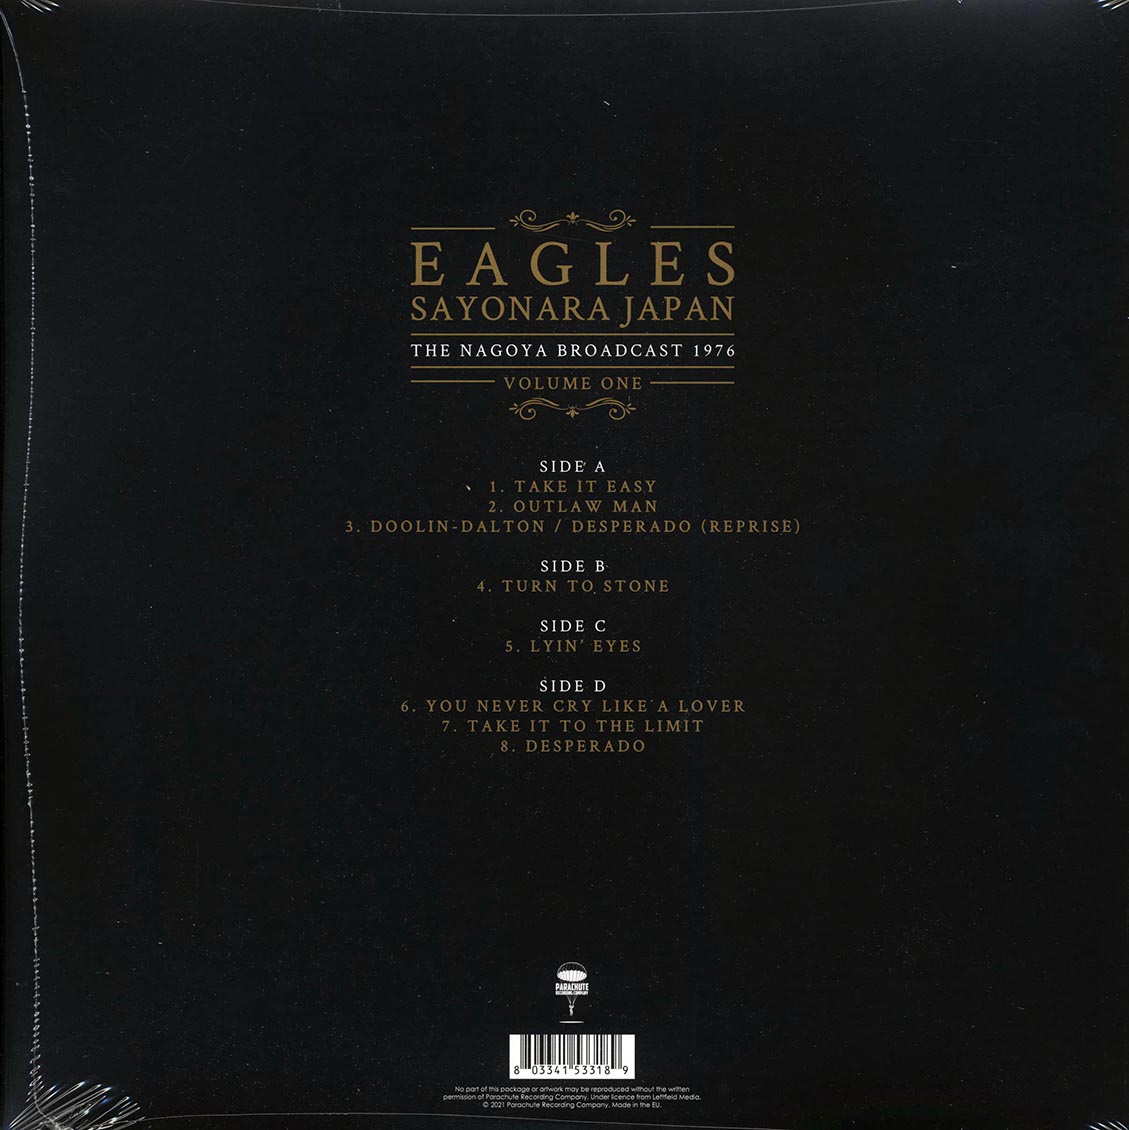 Eagles - Sayonara Japan Volume 1: The Nagoya Broadcast 1976 (2xLP) - Vinyl LP, LP